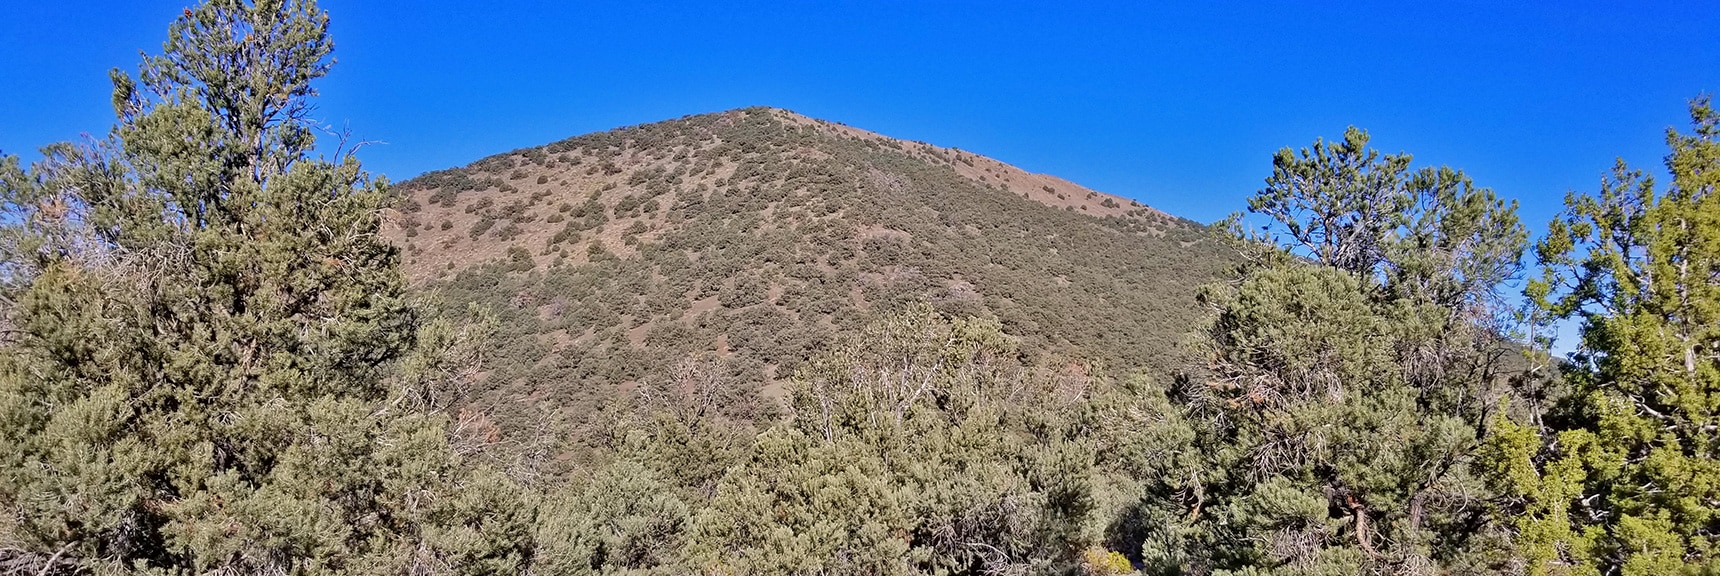 Wildrose Peak Viewed from Saddle at Base of Final Summit Approach | Wildrose Peak | Panamint Mountain Range | Death Valley National Park, California